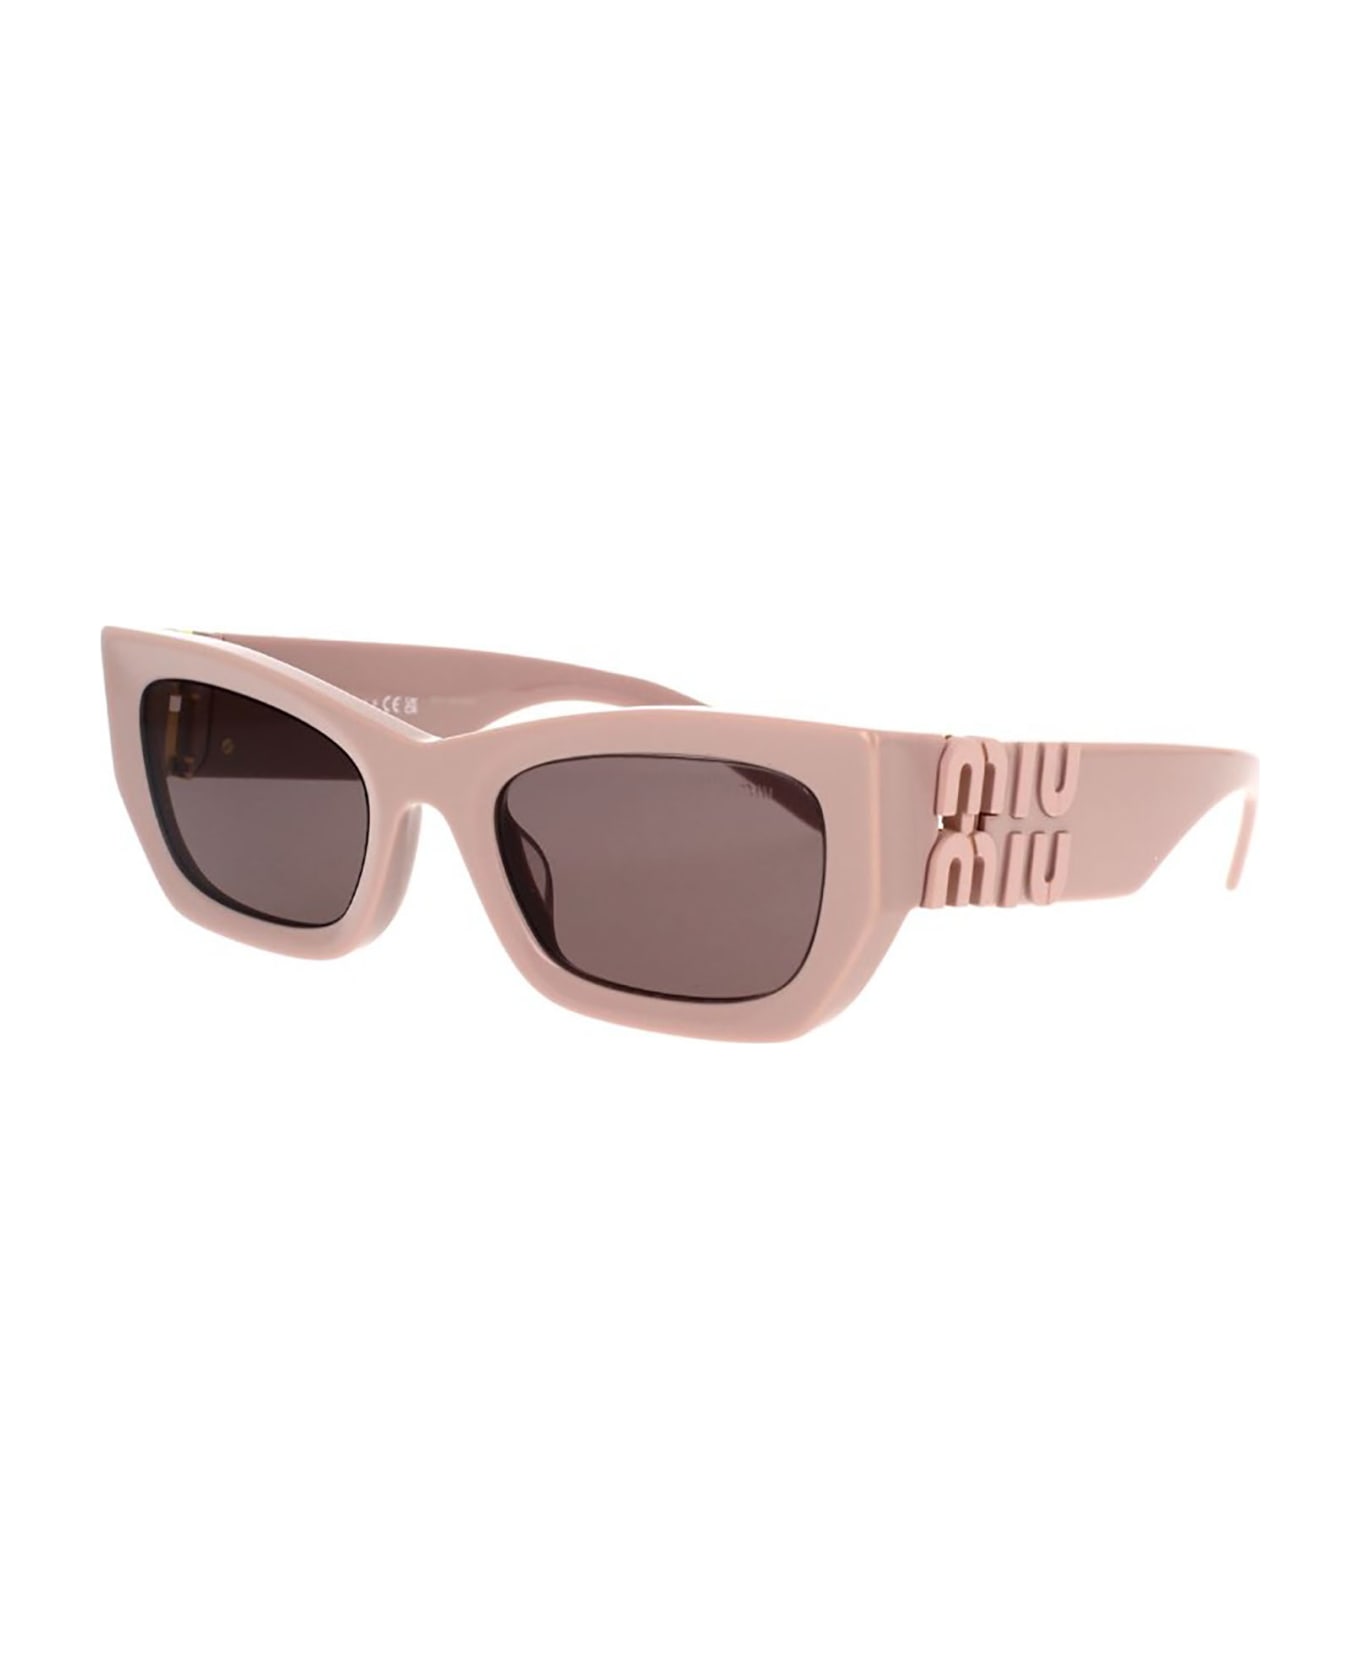 Miu Miu Eyewear 09WS SOLE Sunglasses